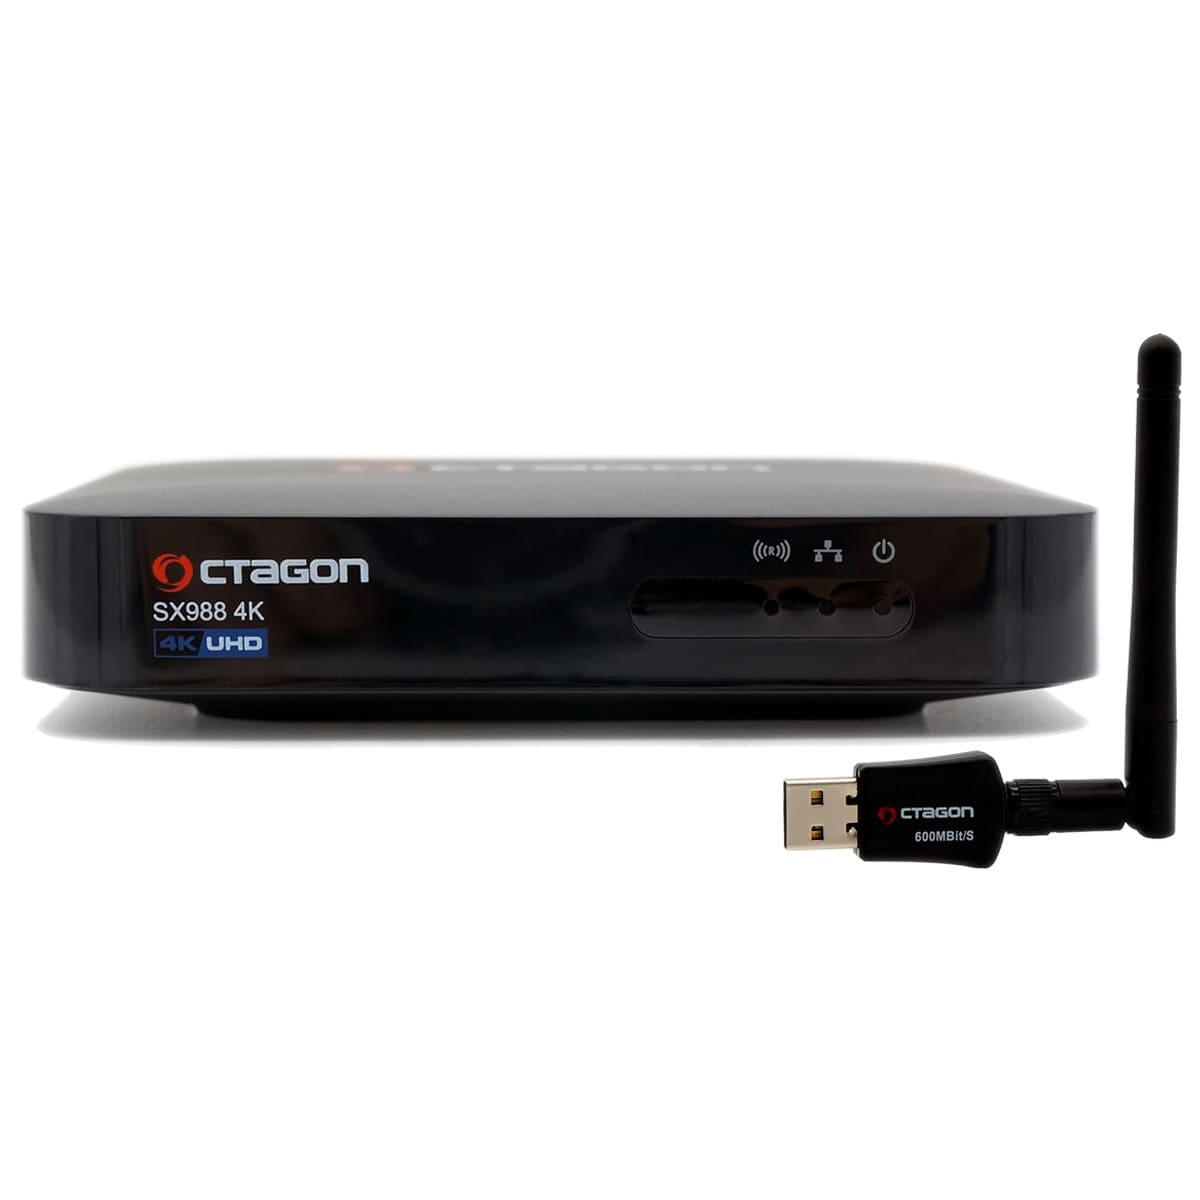 OCTAGON SX988 IP 600 Mbit/s GB 8 Wifi